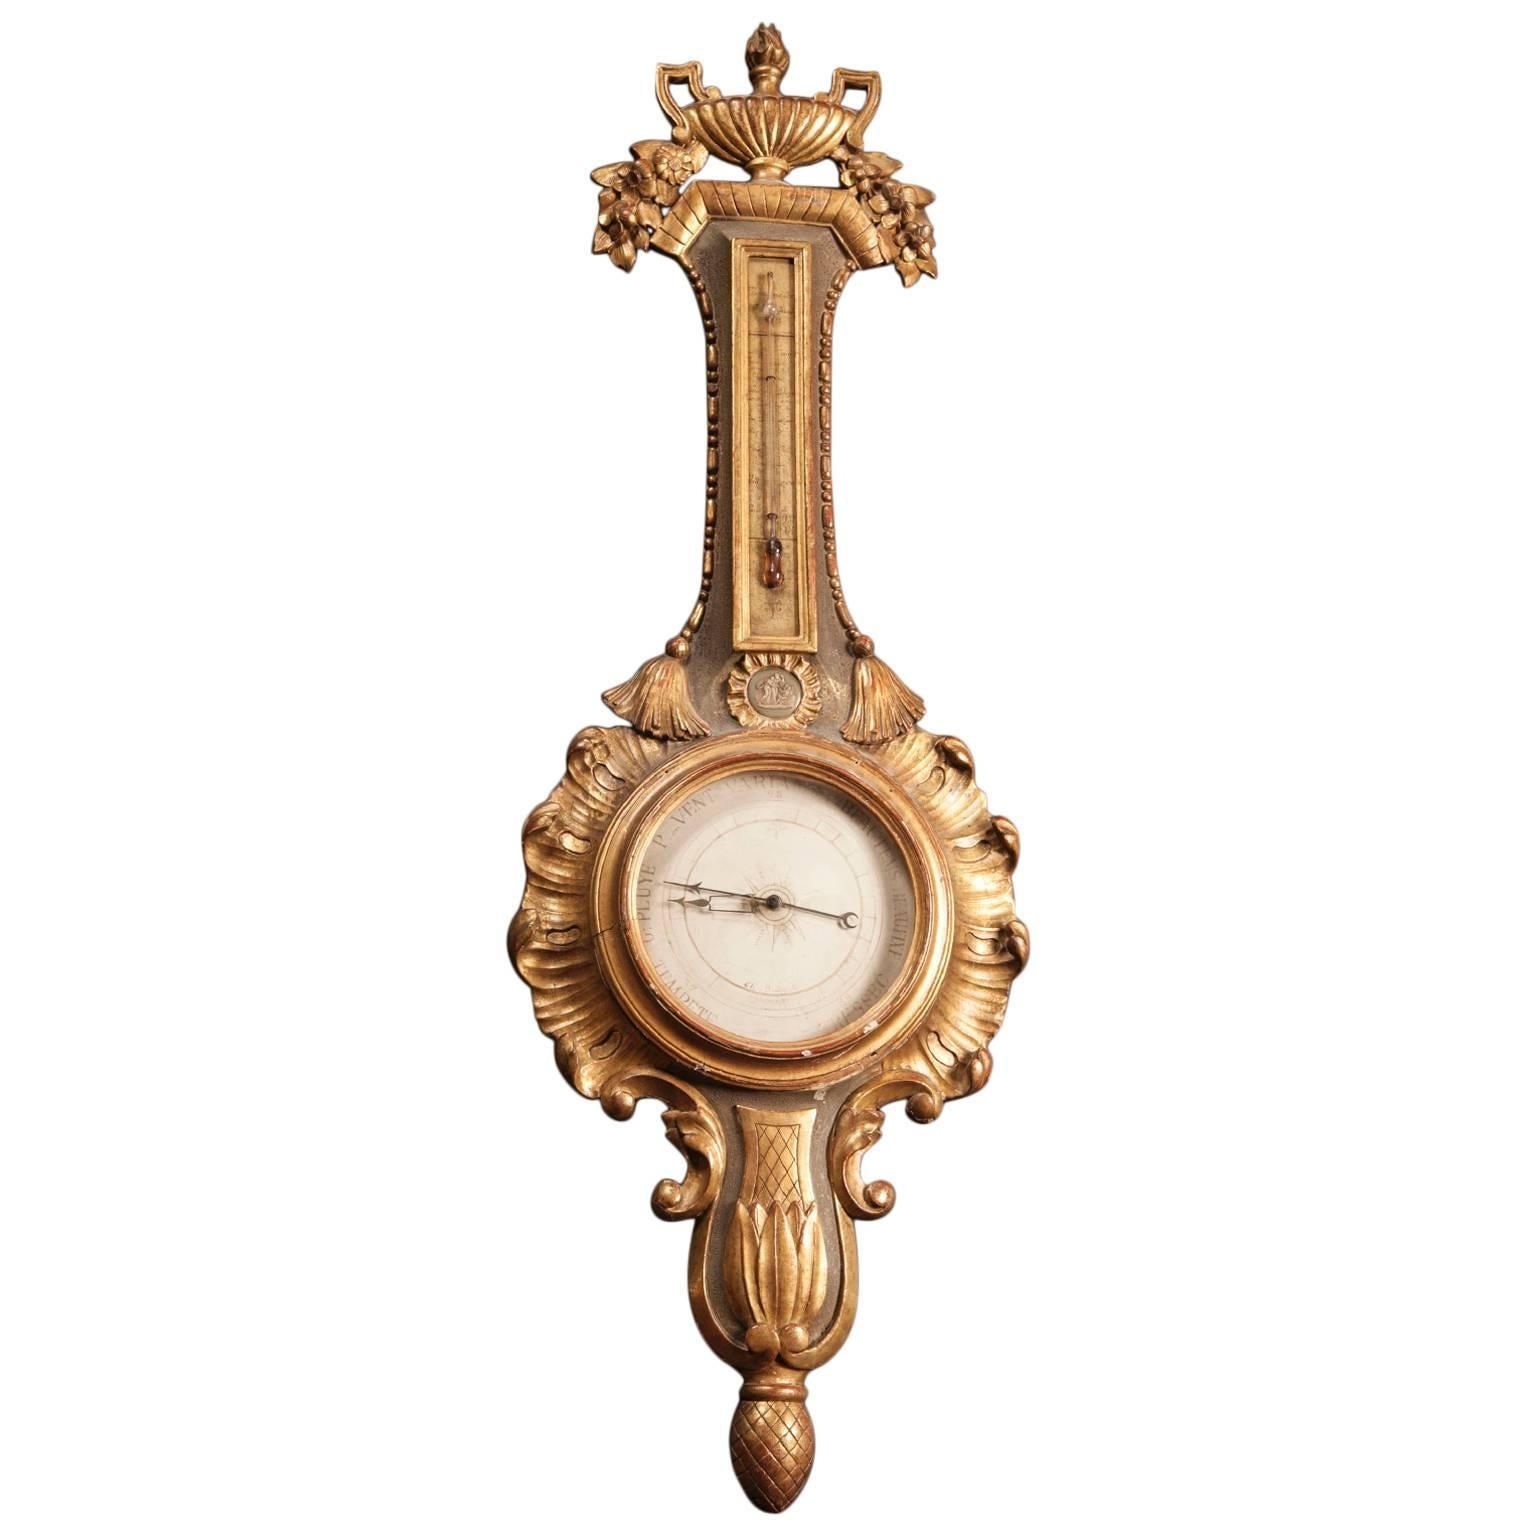 Blattgold-Barometer aus dem 18. Jahrhundert